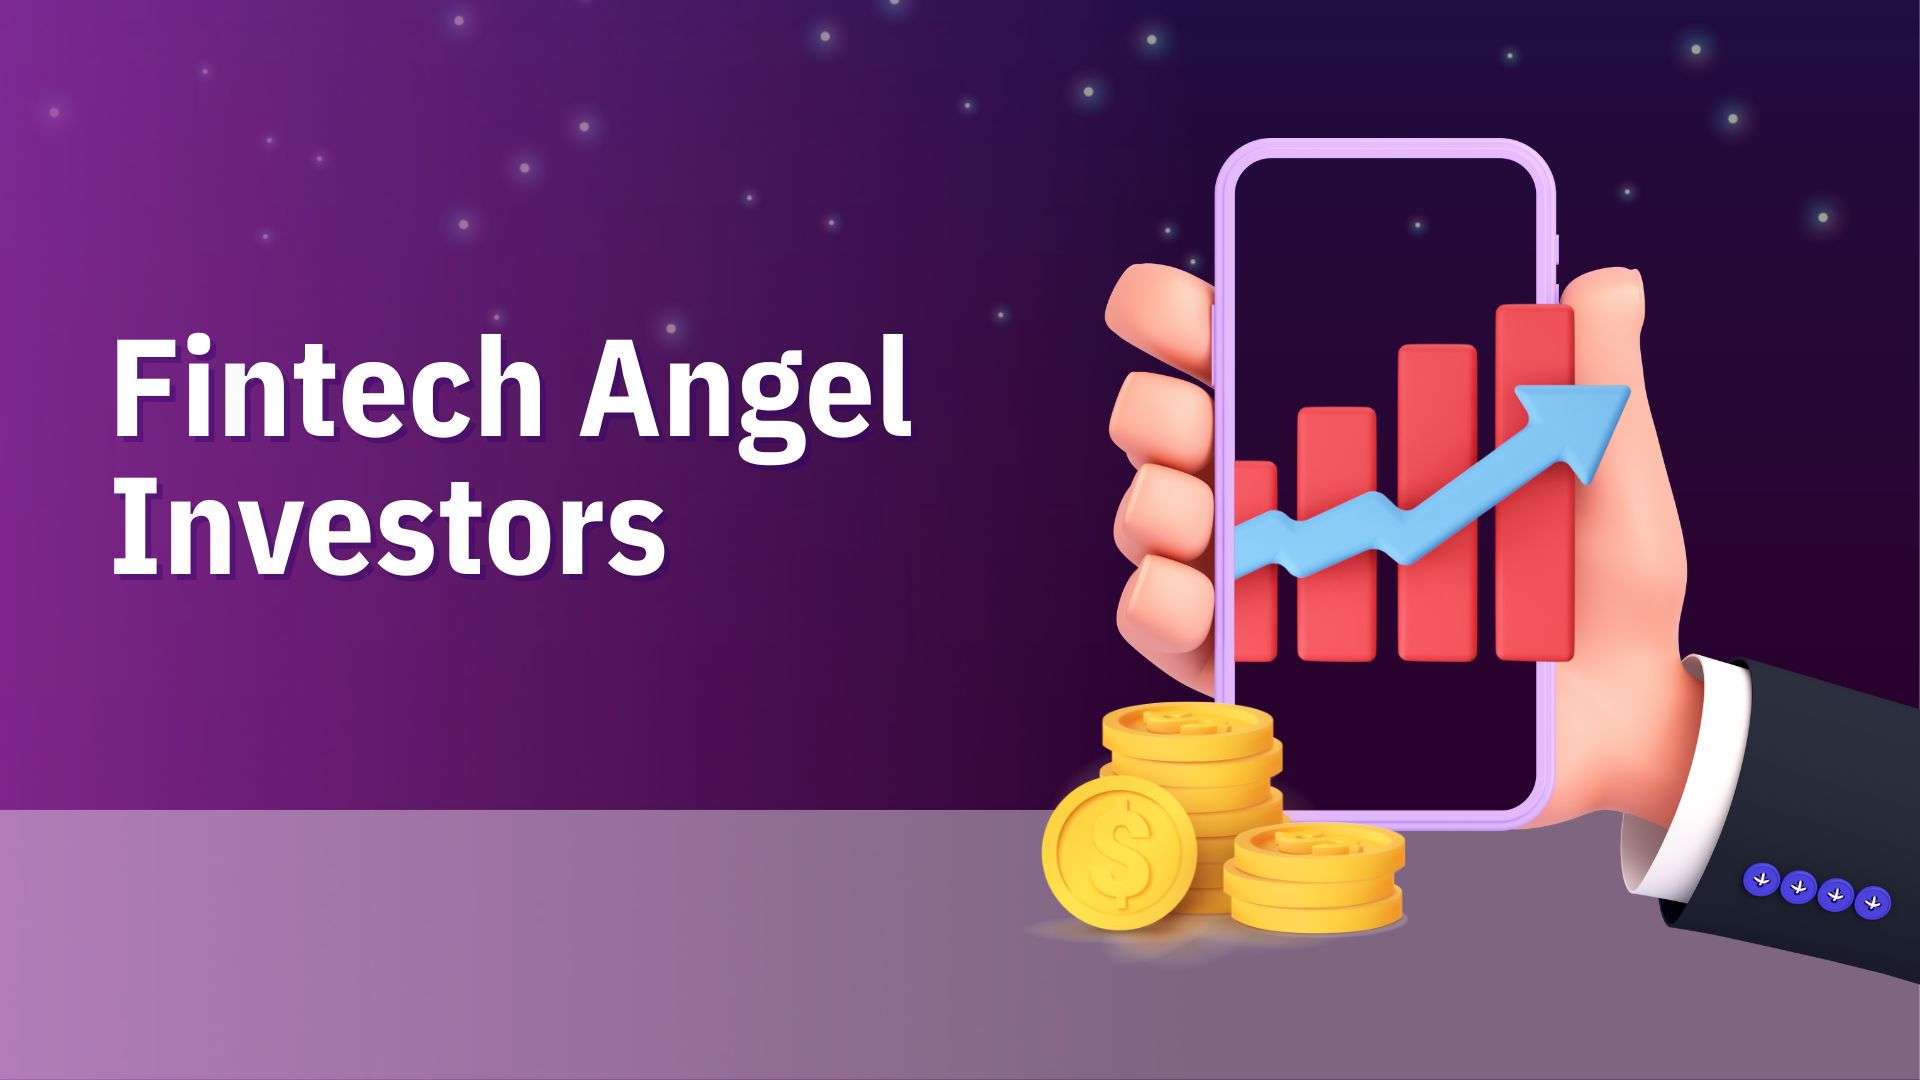 Fintech Angel Investors